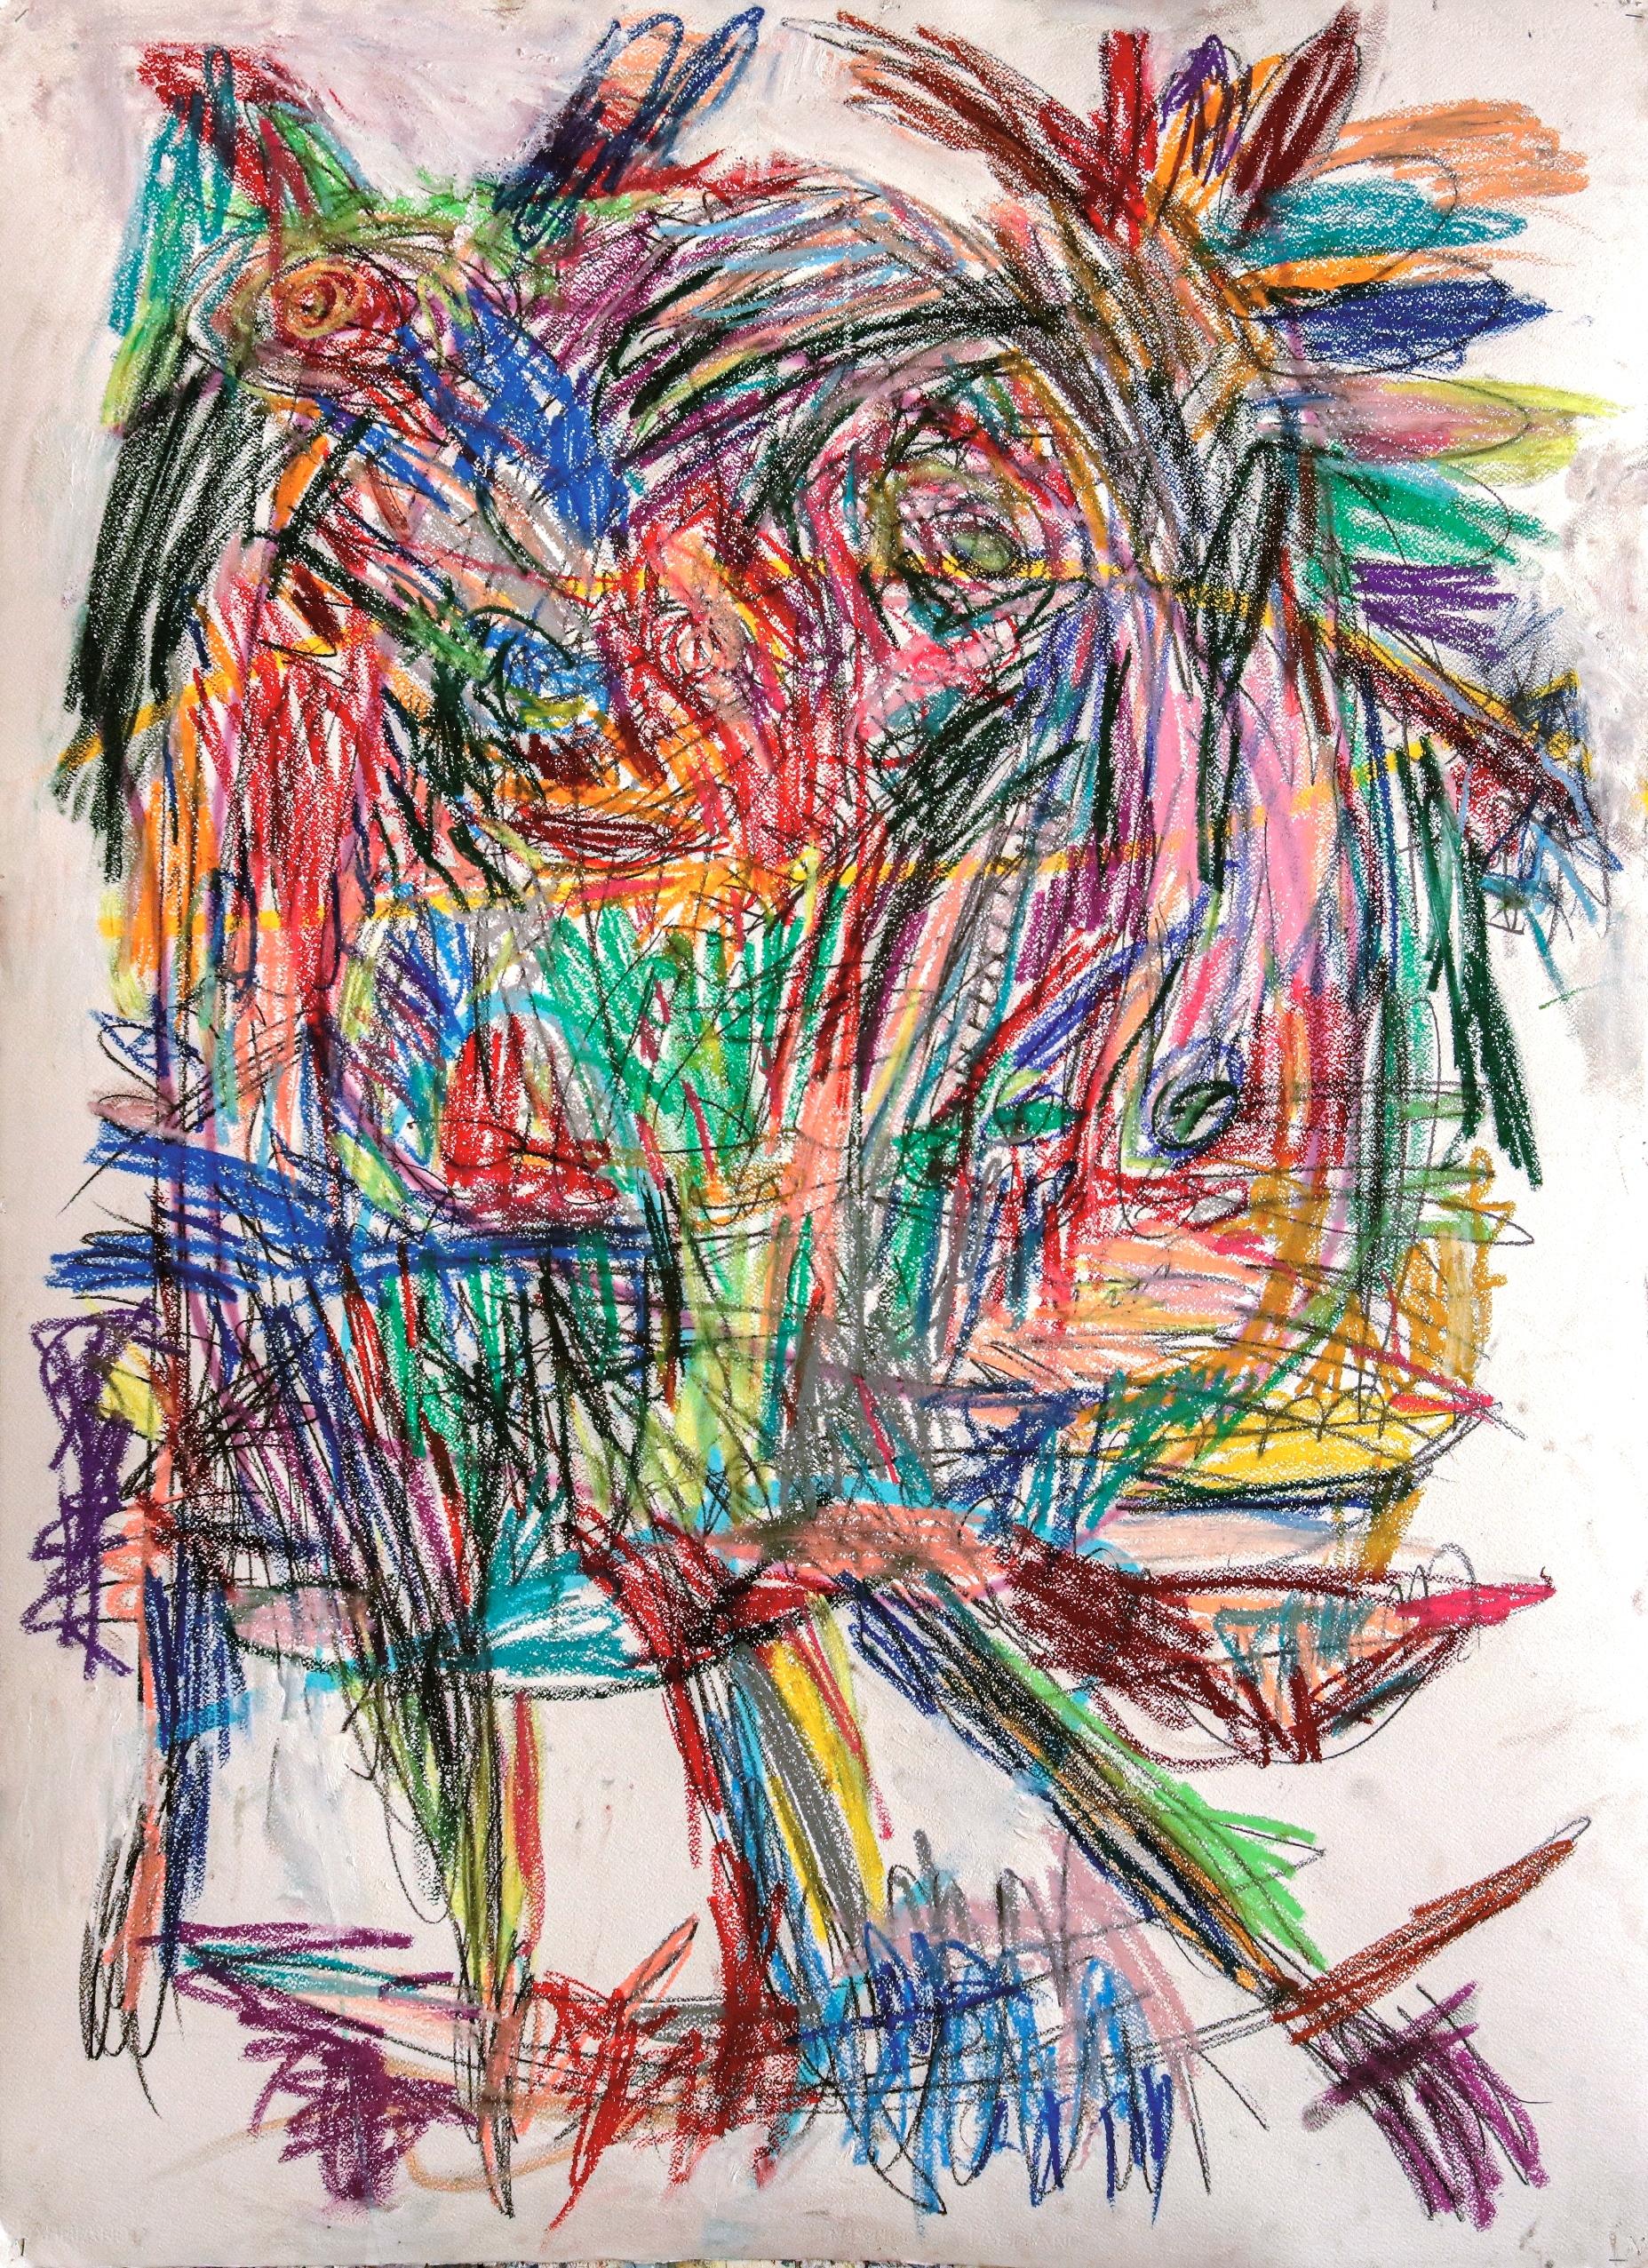 Hula Hoop Julien Wolf dessin d'art contemporain expressionniste au pastel outsider